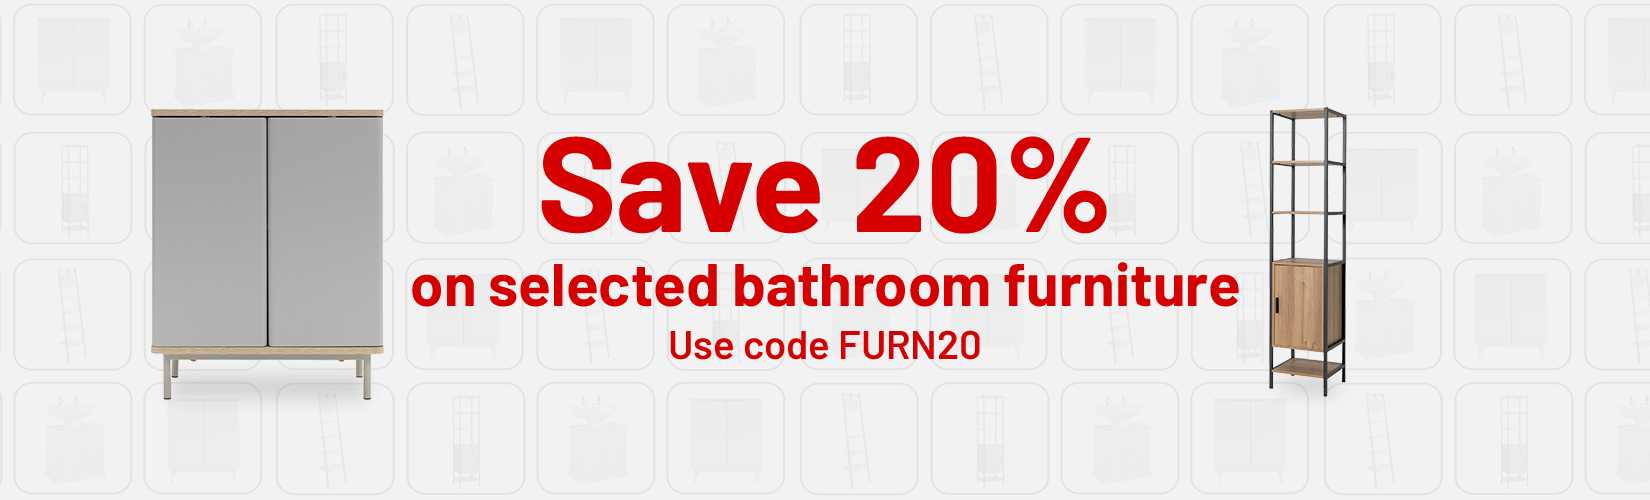 Save 20% on selected bathroom furniture. Use code FURN20.